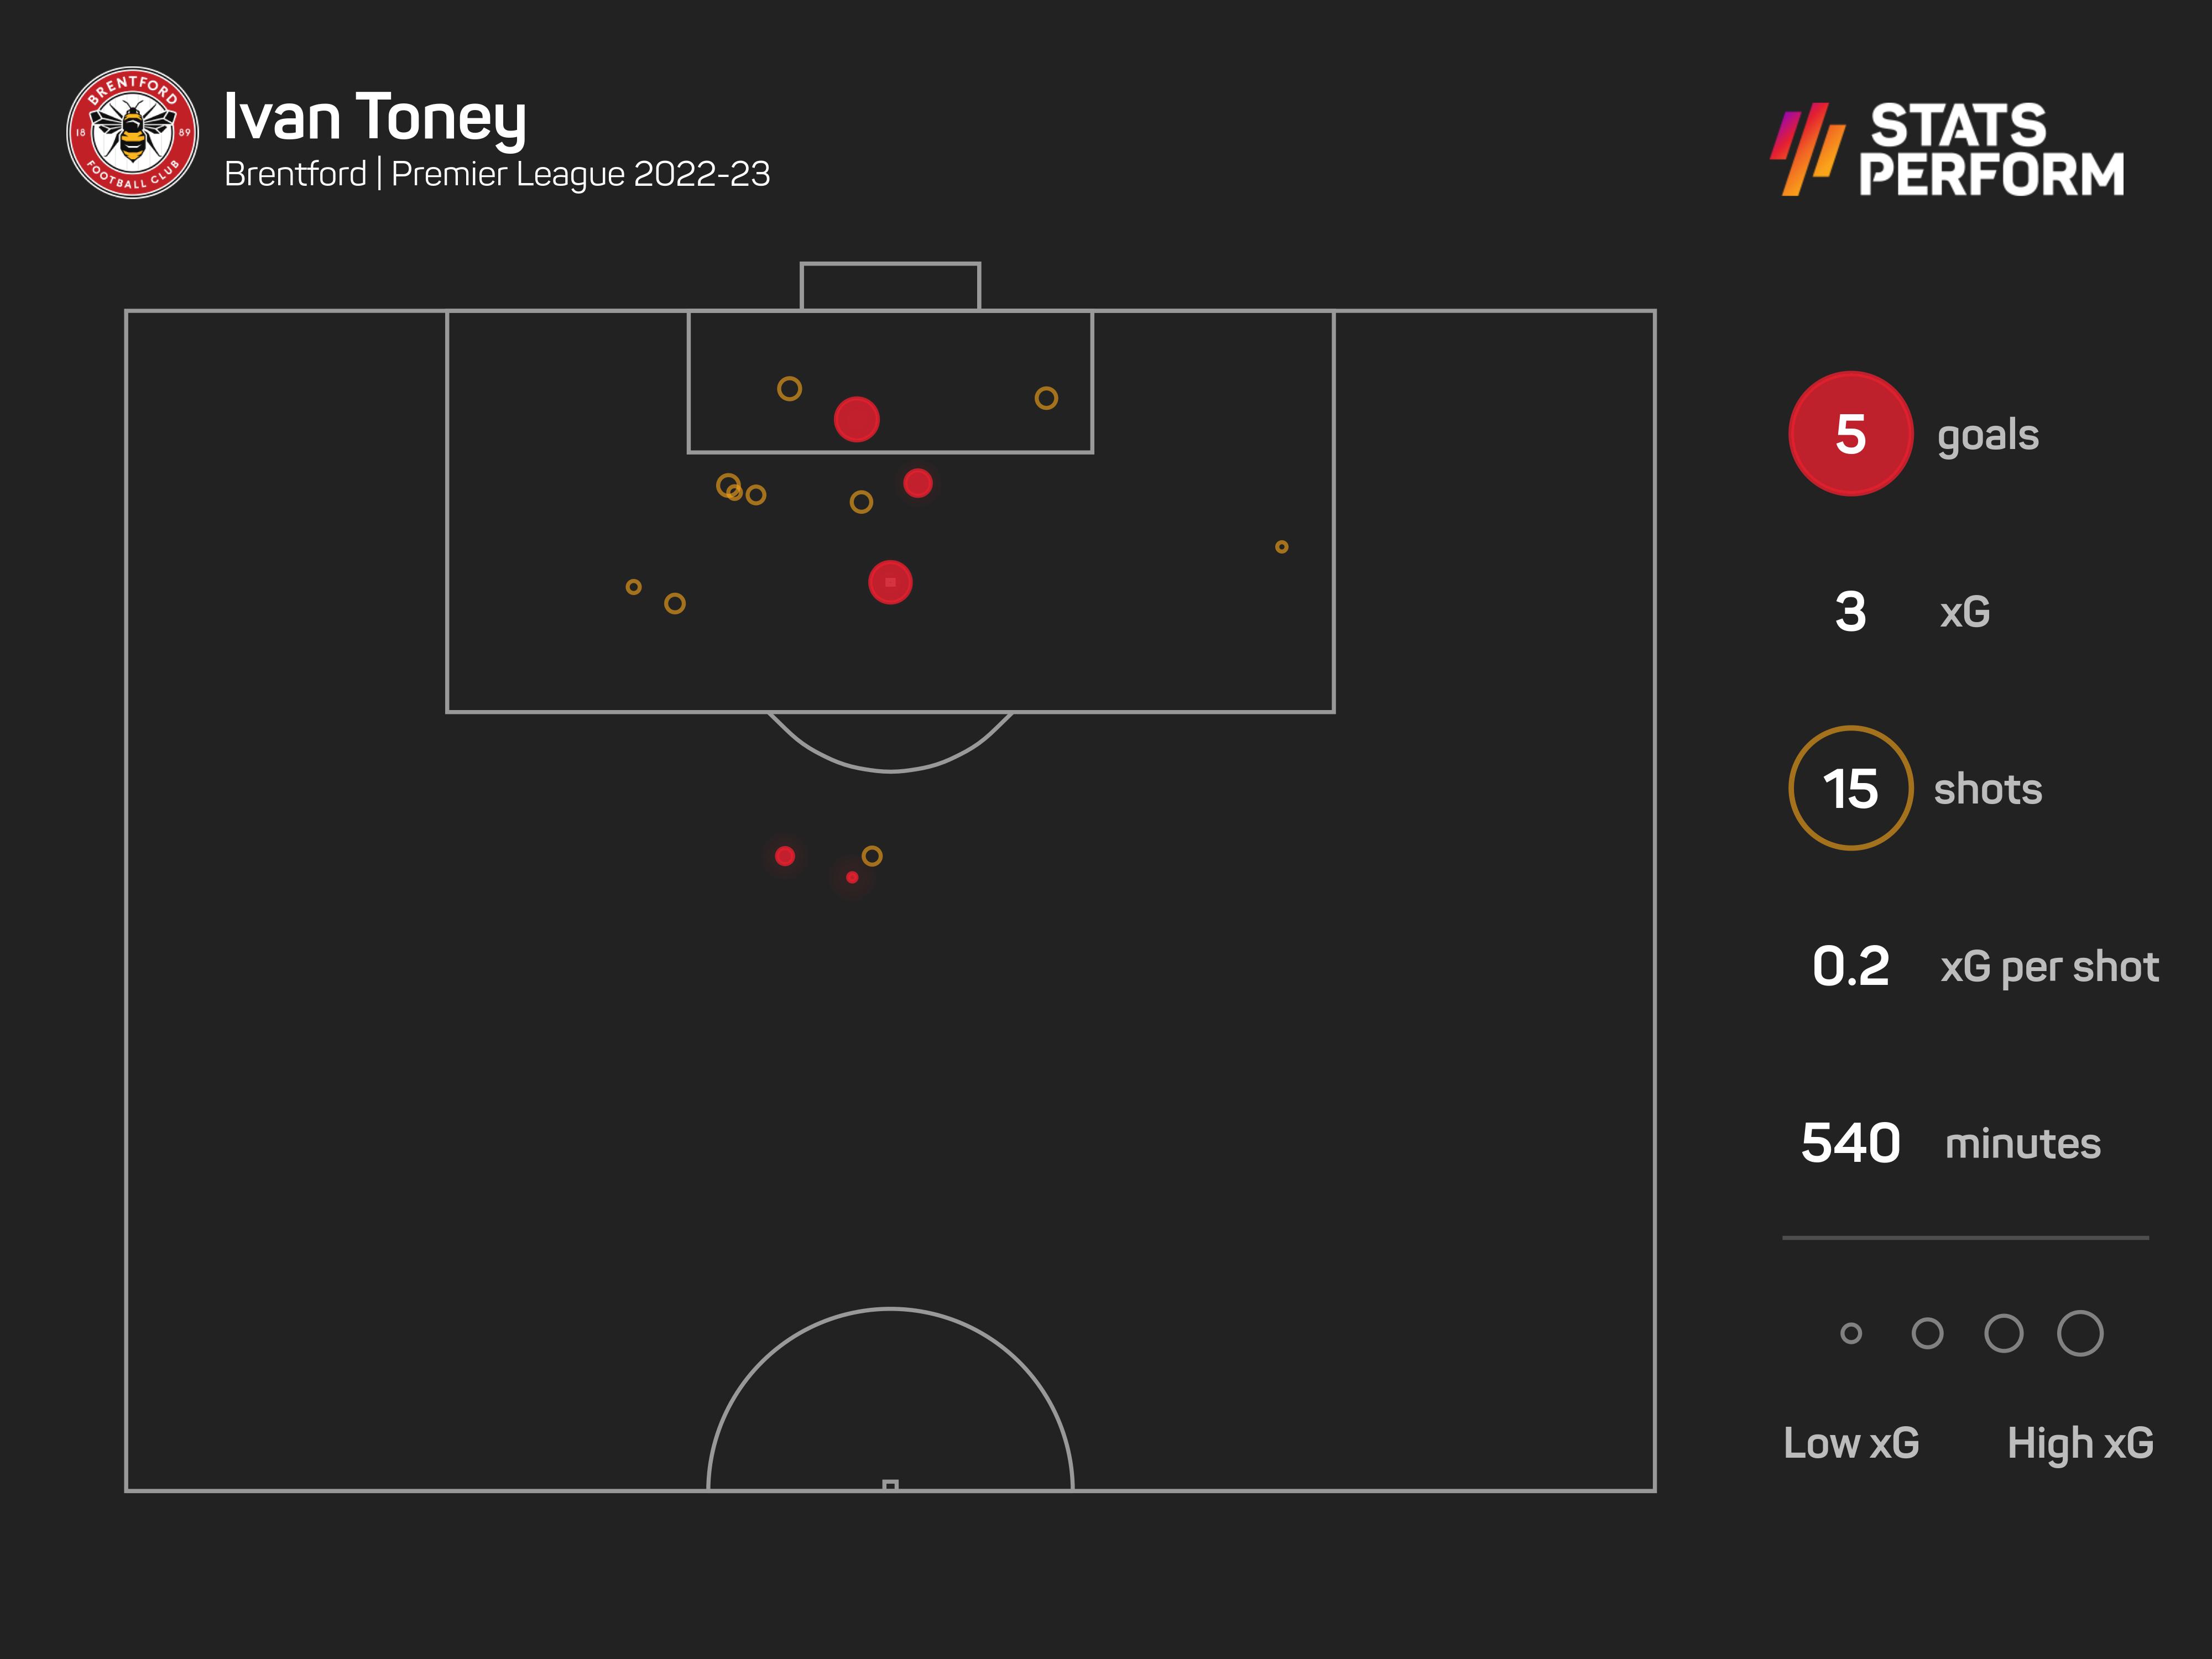 Ivan Toney has enjoyed a fine start to the season